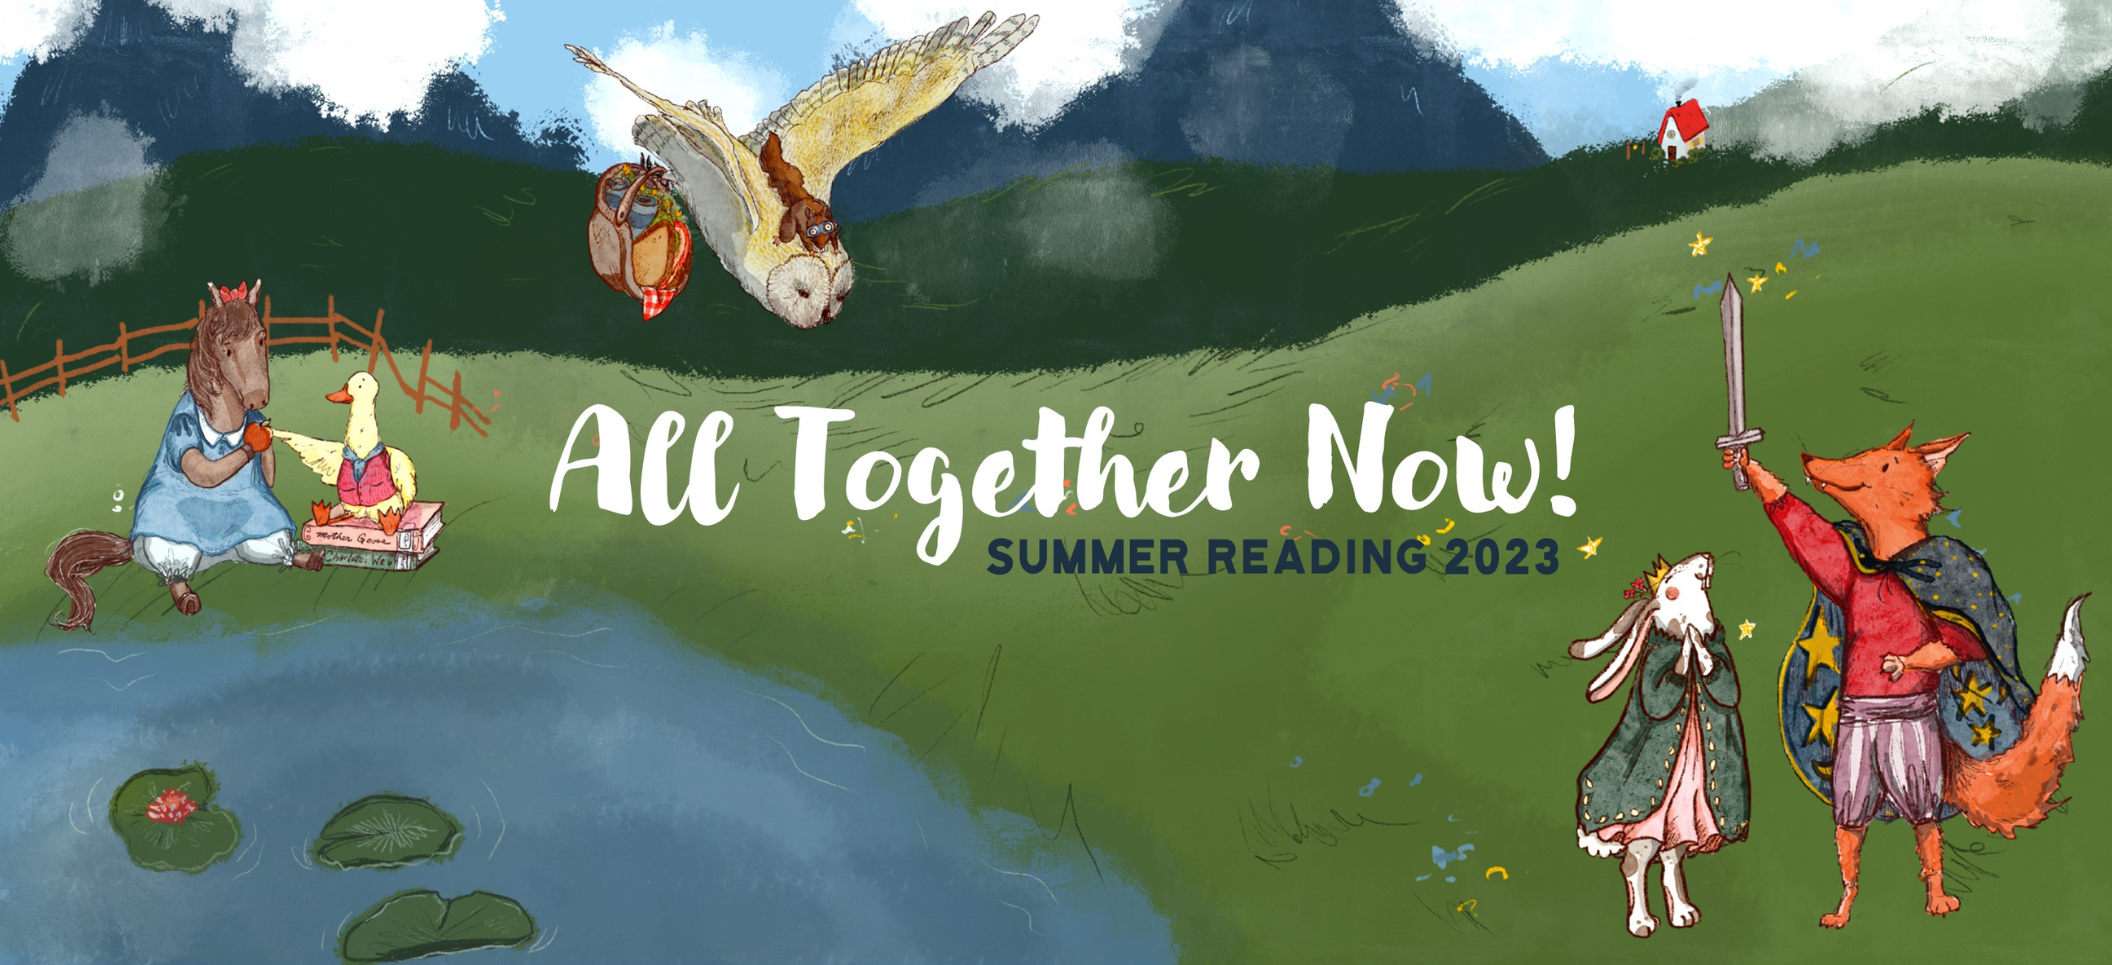 All Together Now! Summer Reading Program 2023 -- link to Beanstack challenge log